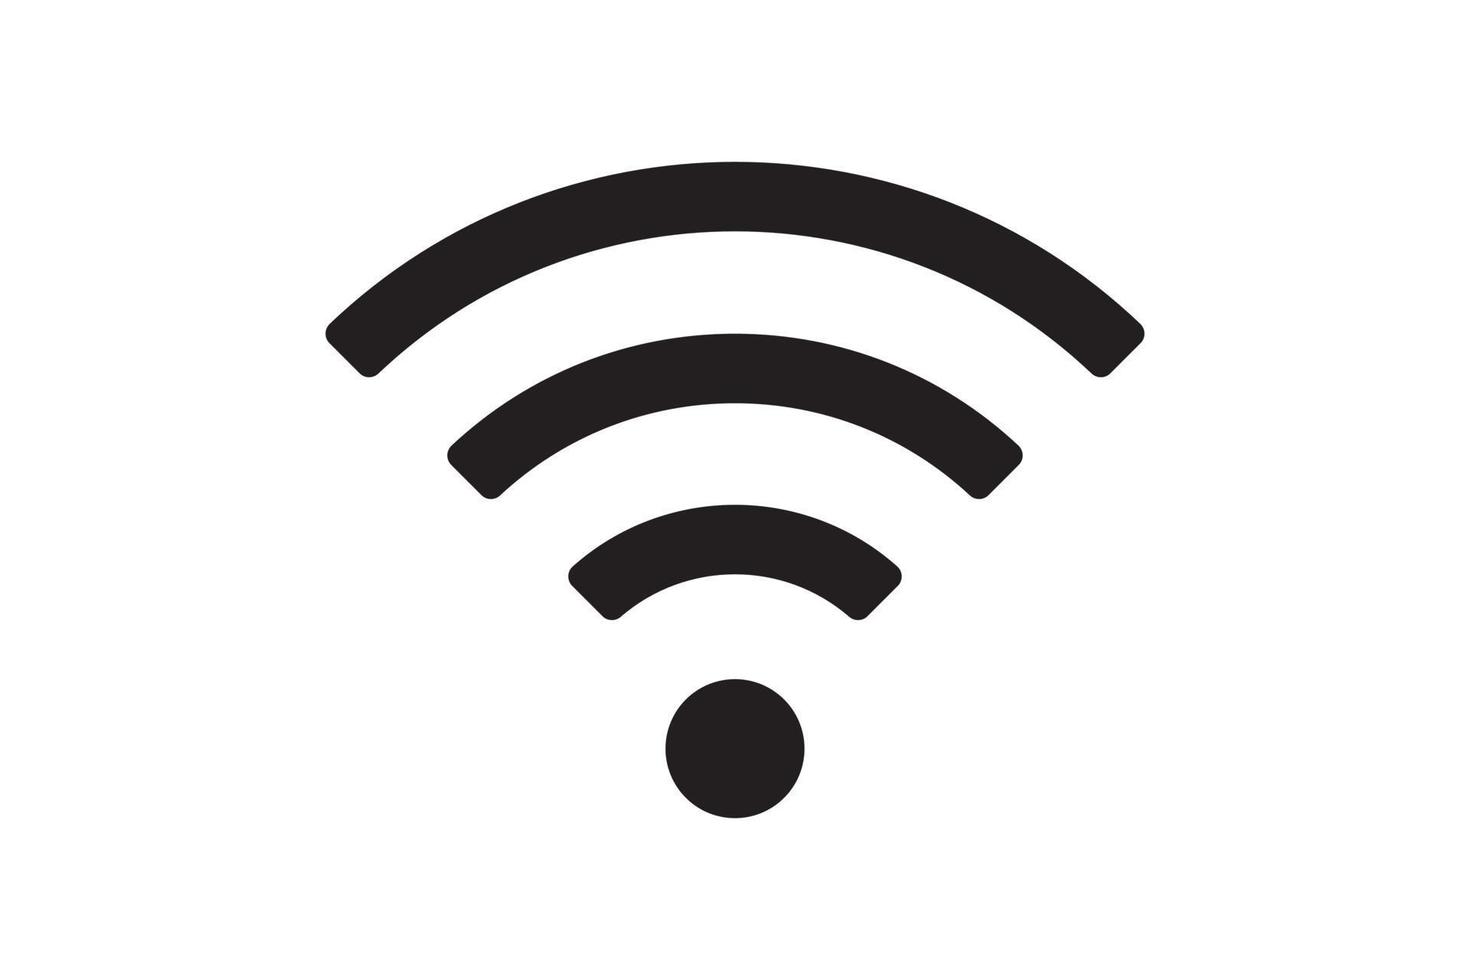 conexión de señal de símbolo wi fi. señal de tecnología inalámbrica de internet vectorial. icono de comunicación de red wifi. vector